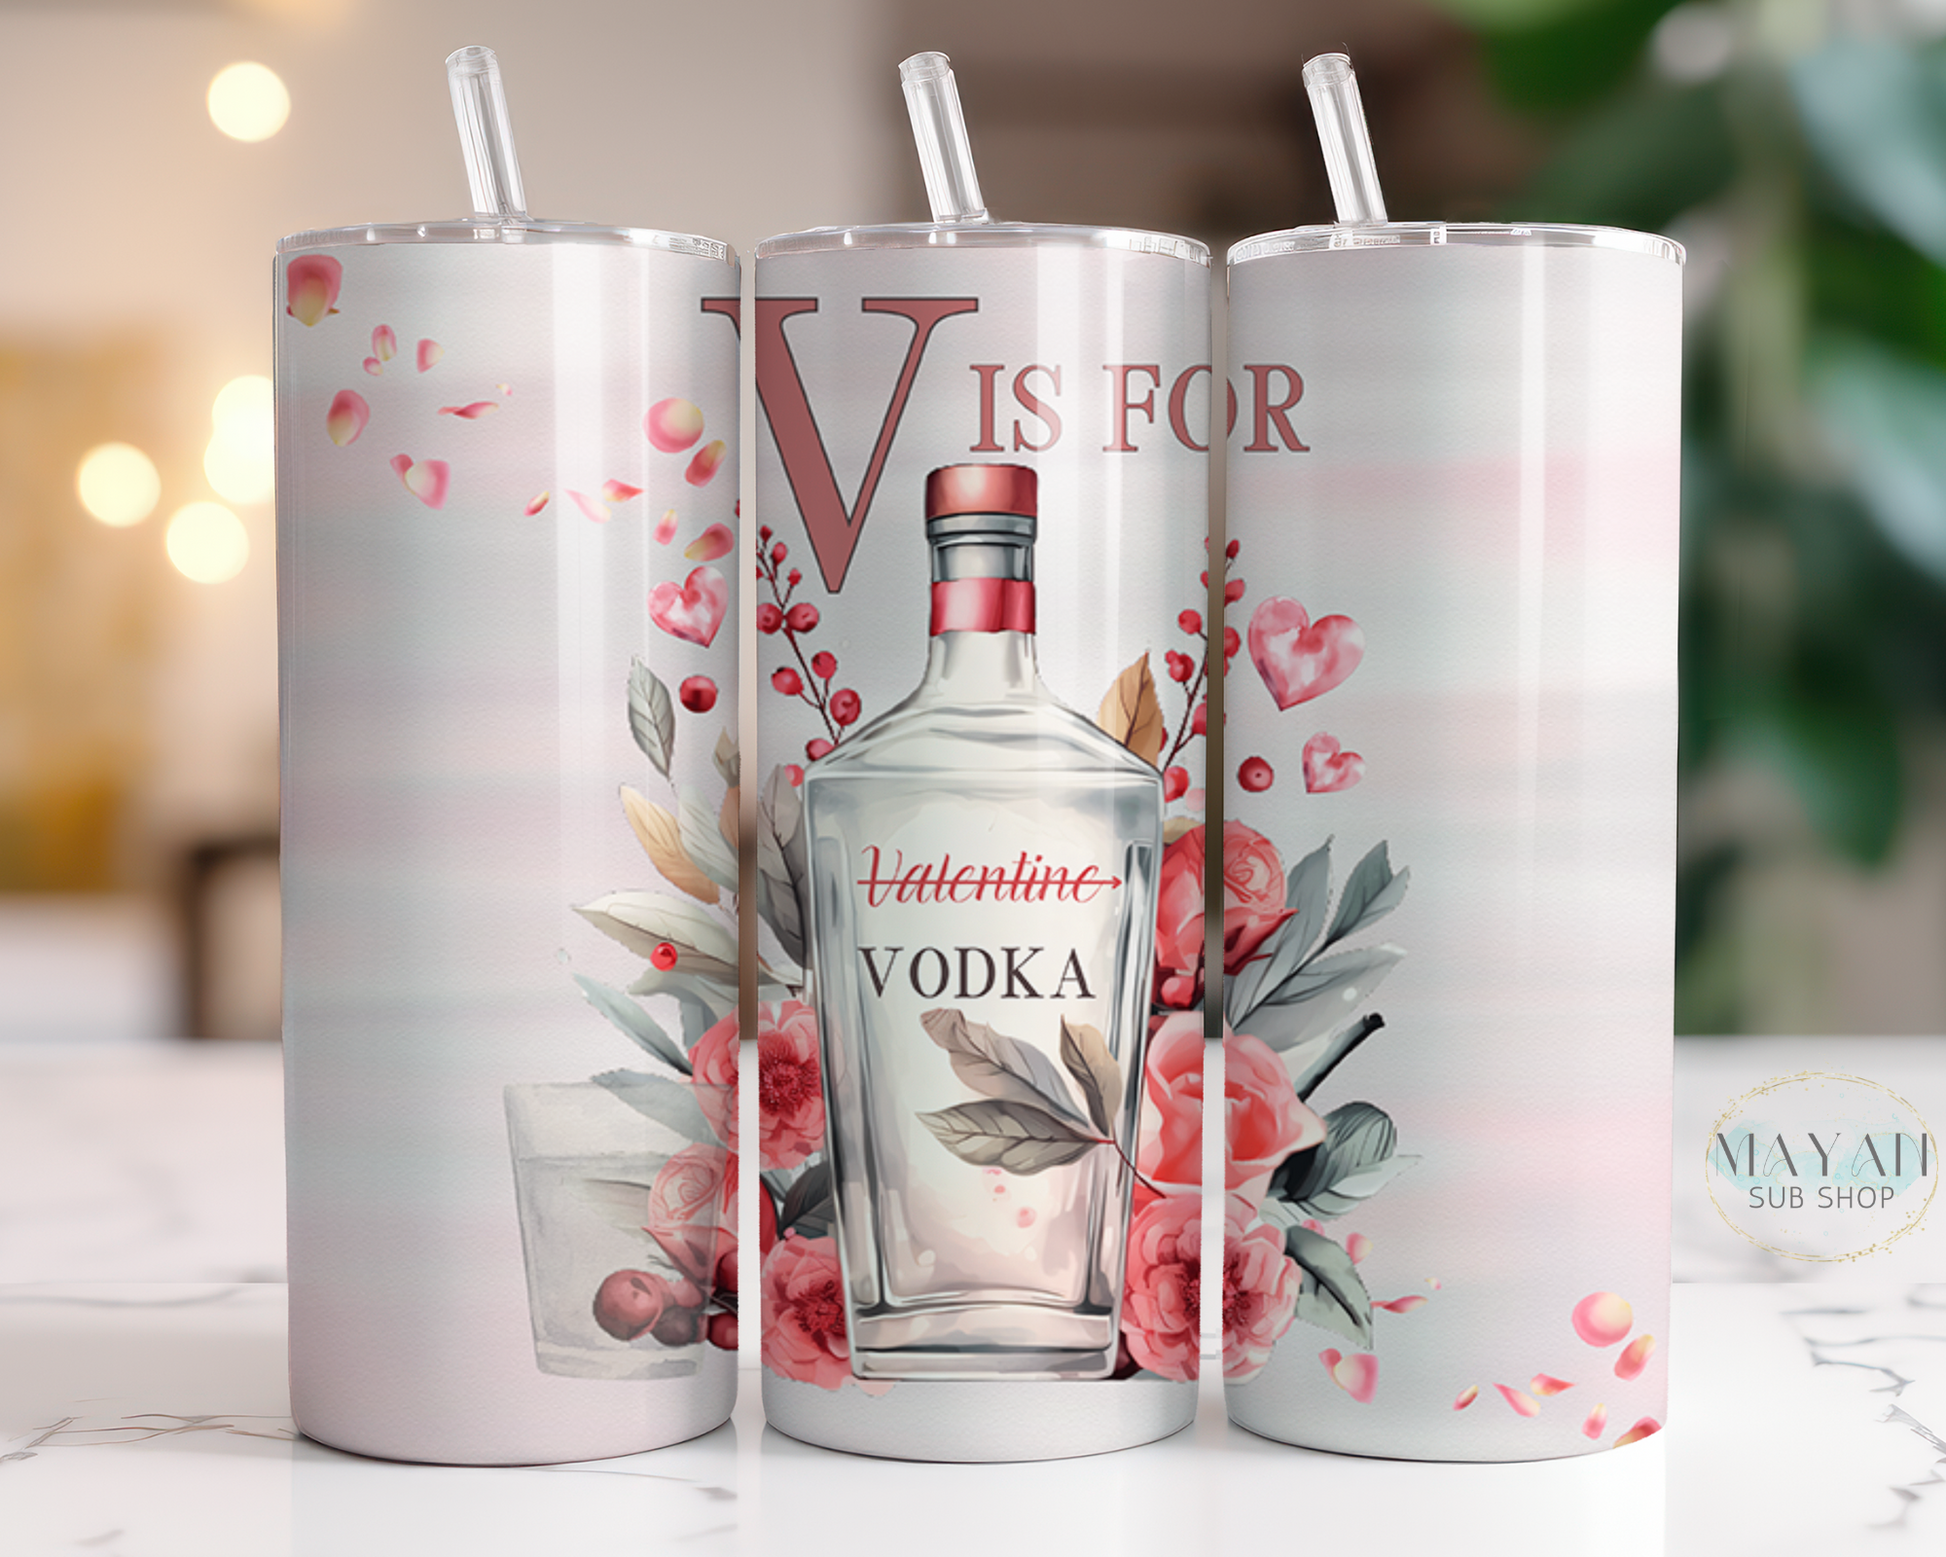 V is for Vodka 20 oz. skinny tumbler. -Mayan Sub Shop